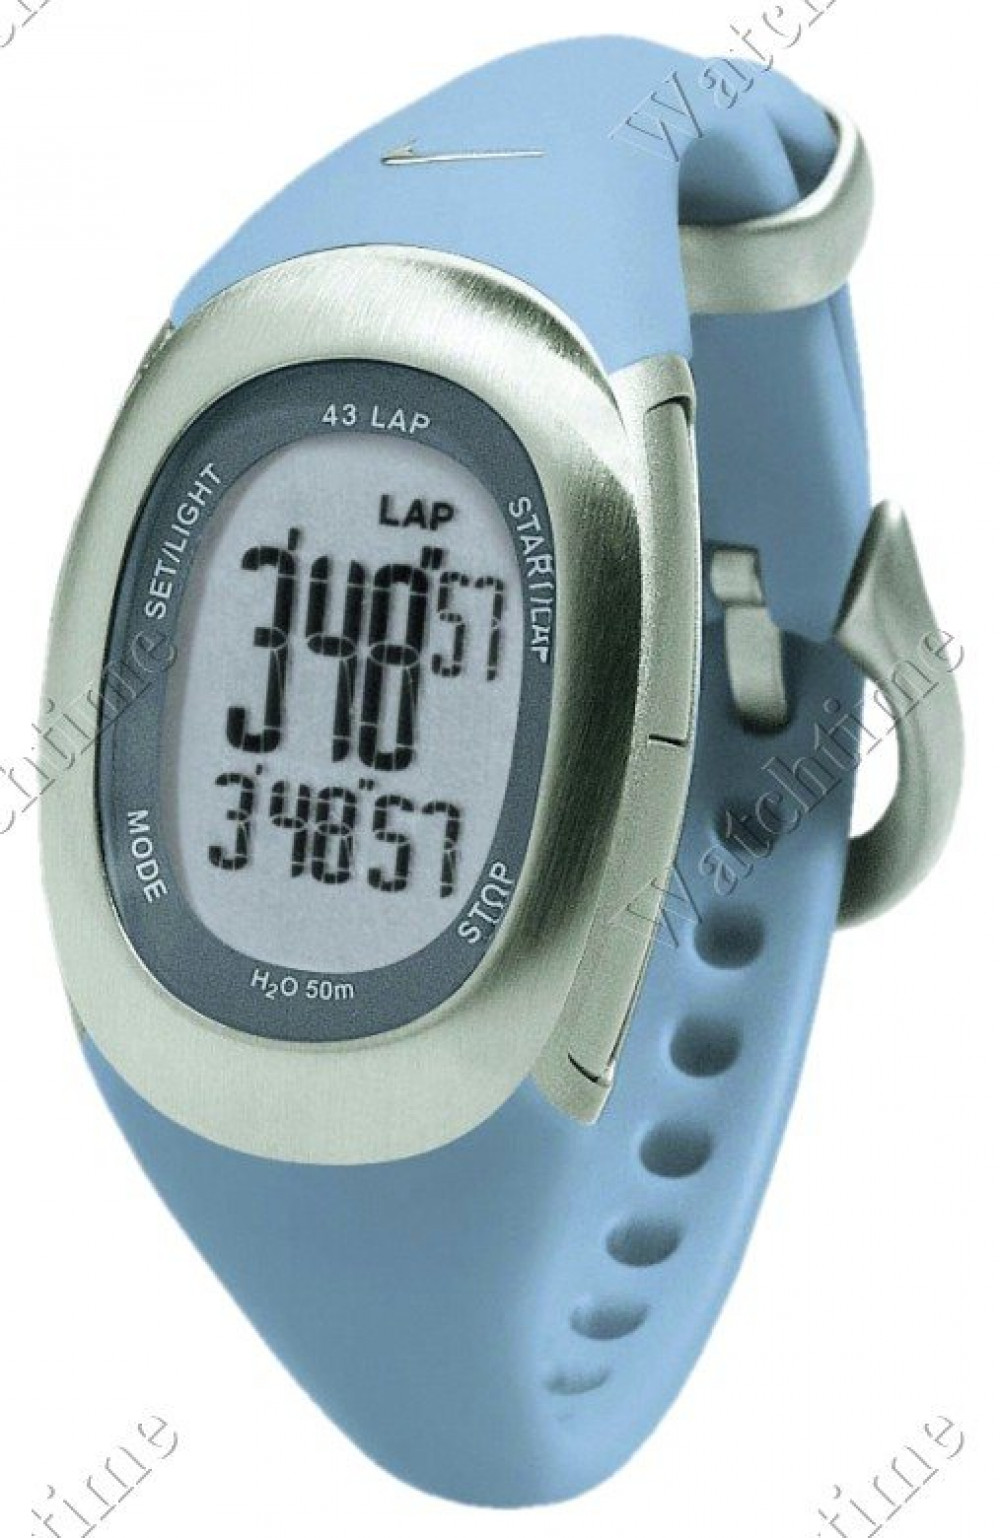 Zegarek firmy Nike, model Imara Run